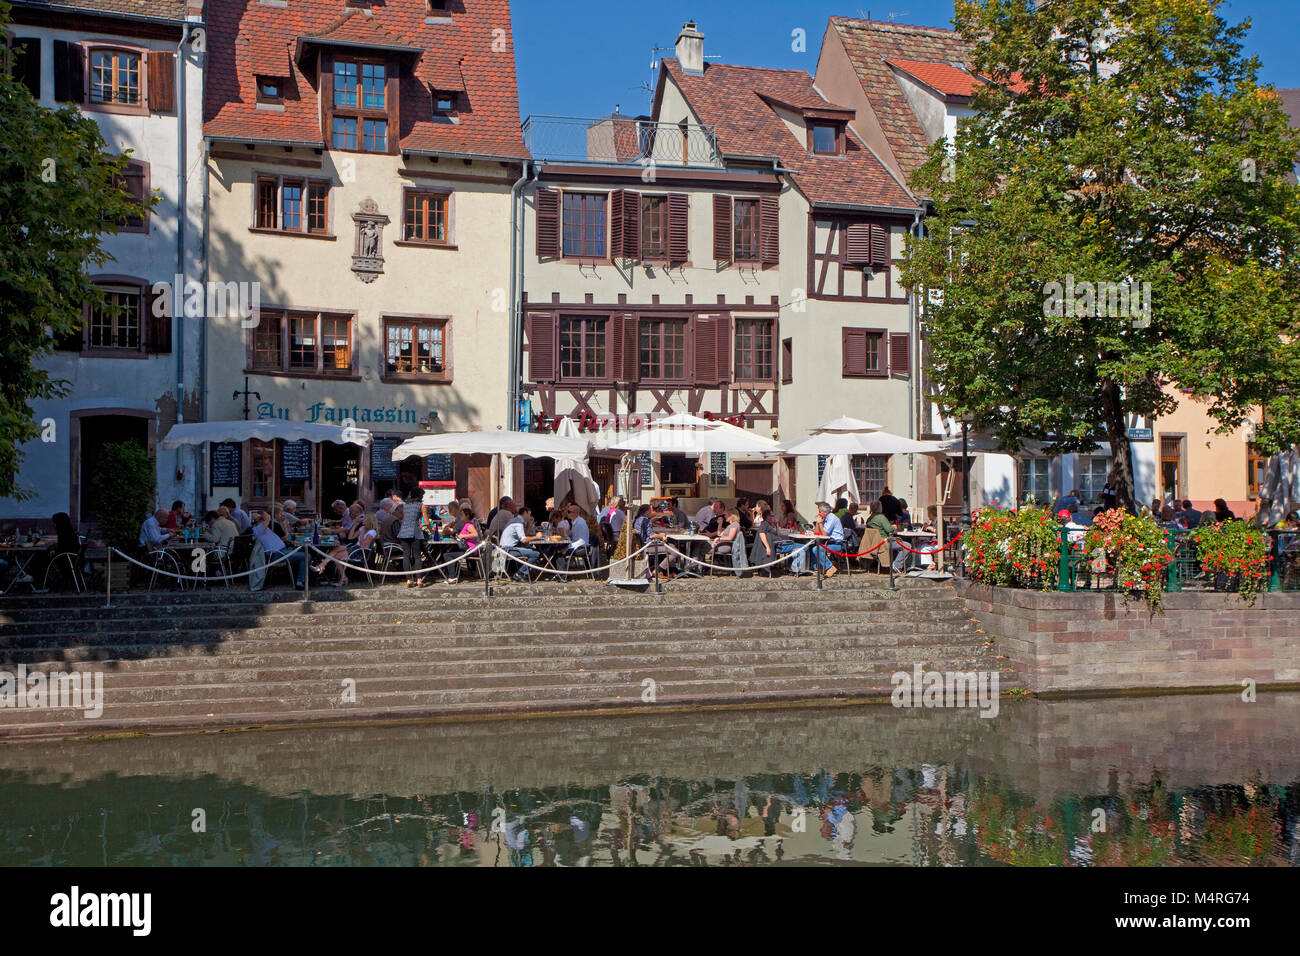 Restaurant at Ill river, La Petite France (Little France), Strasbourg, Alsace,Bas-Rhin, France, Europe Stock Photo